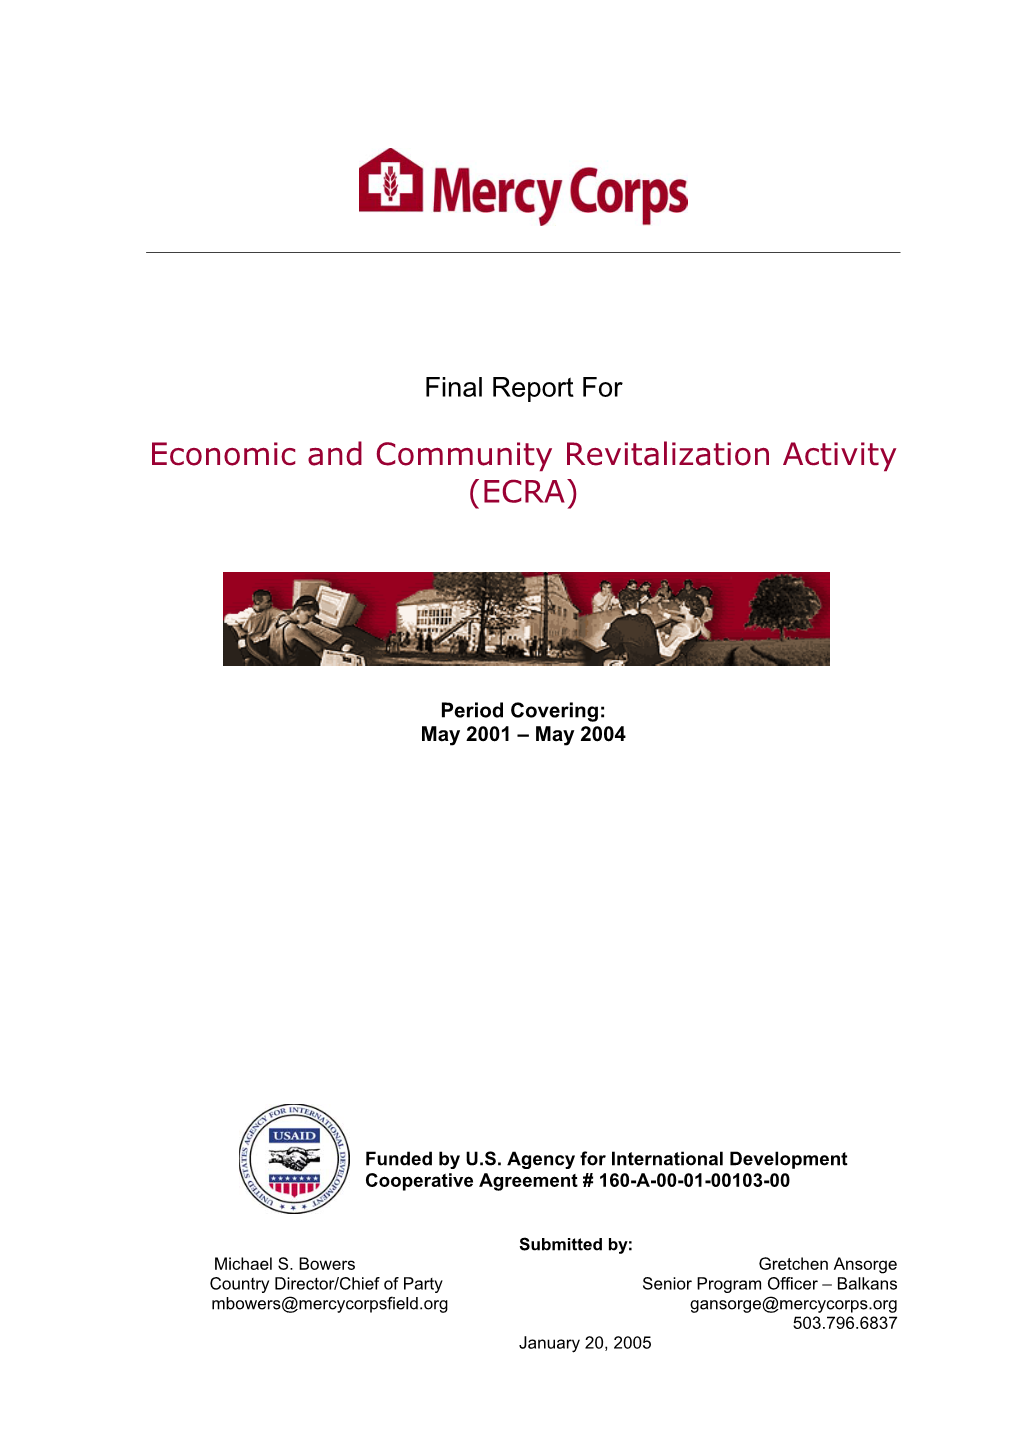 Economic and Community Revitalization Activity (ECRA)